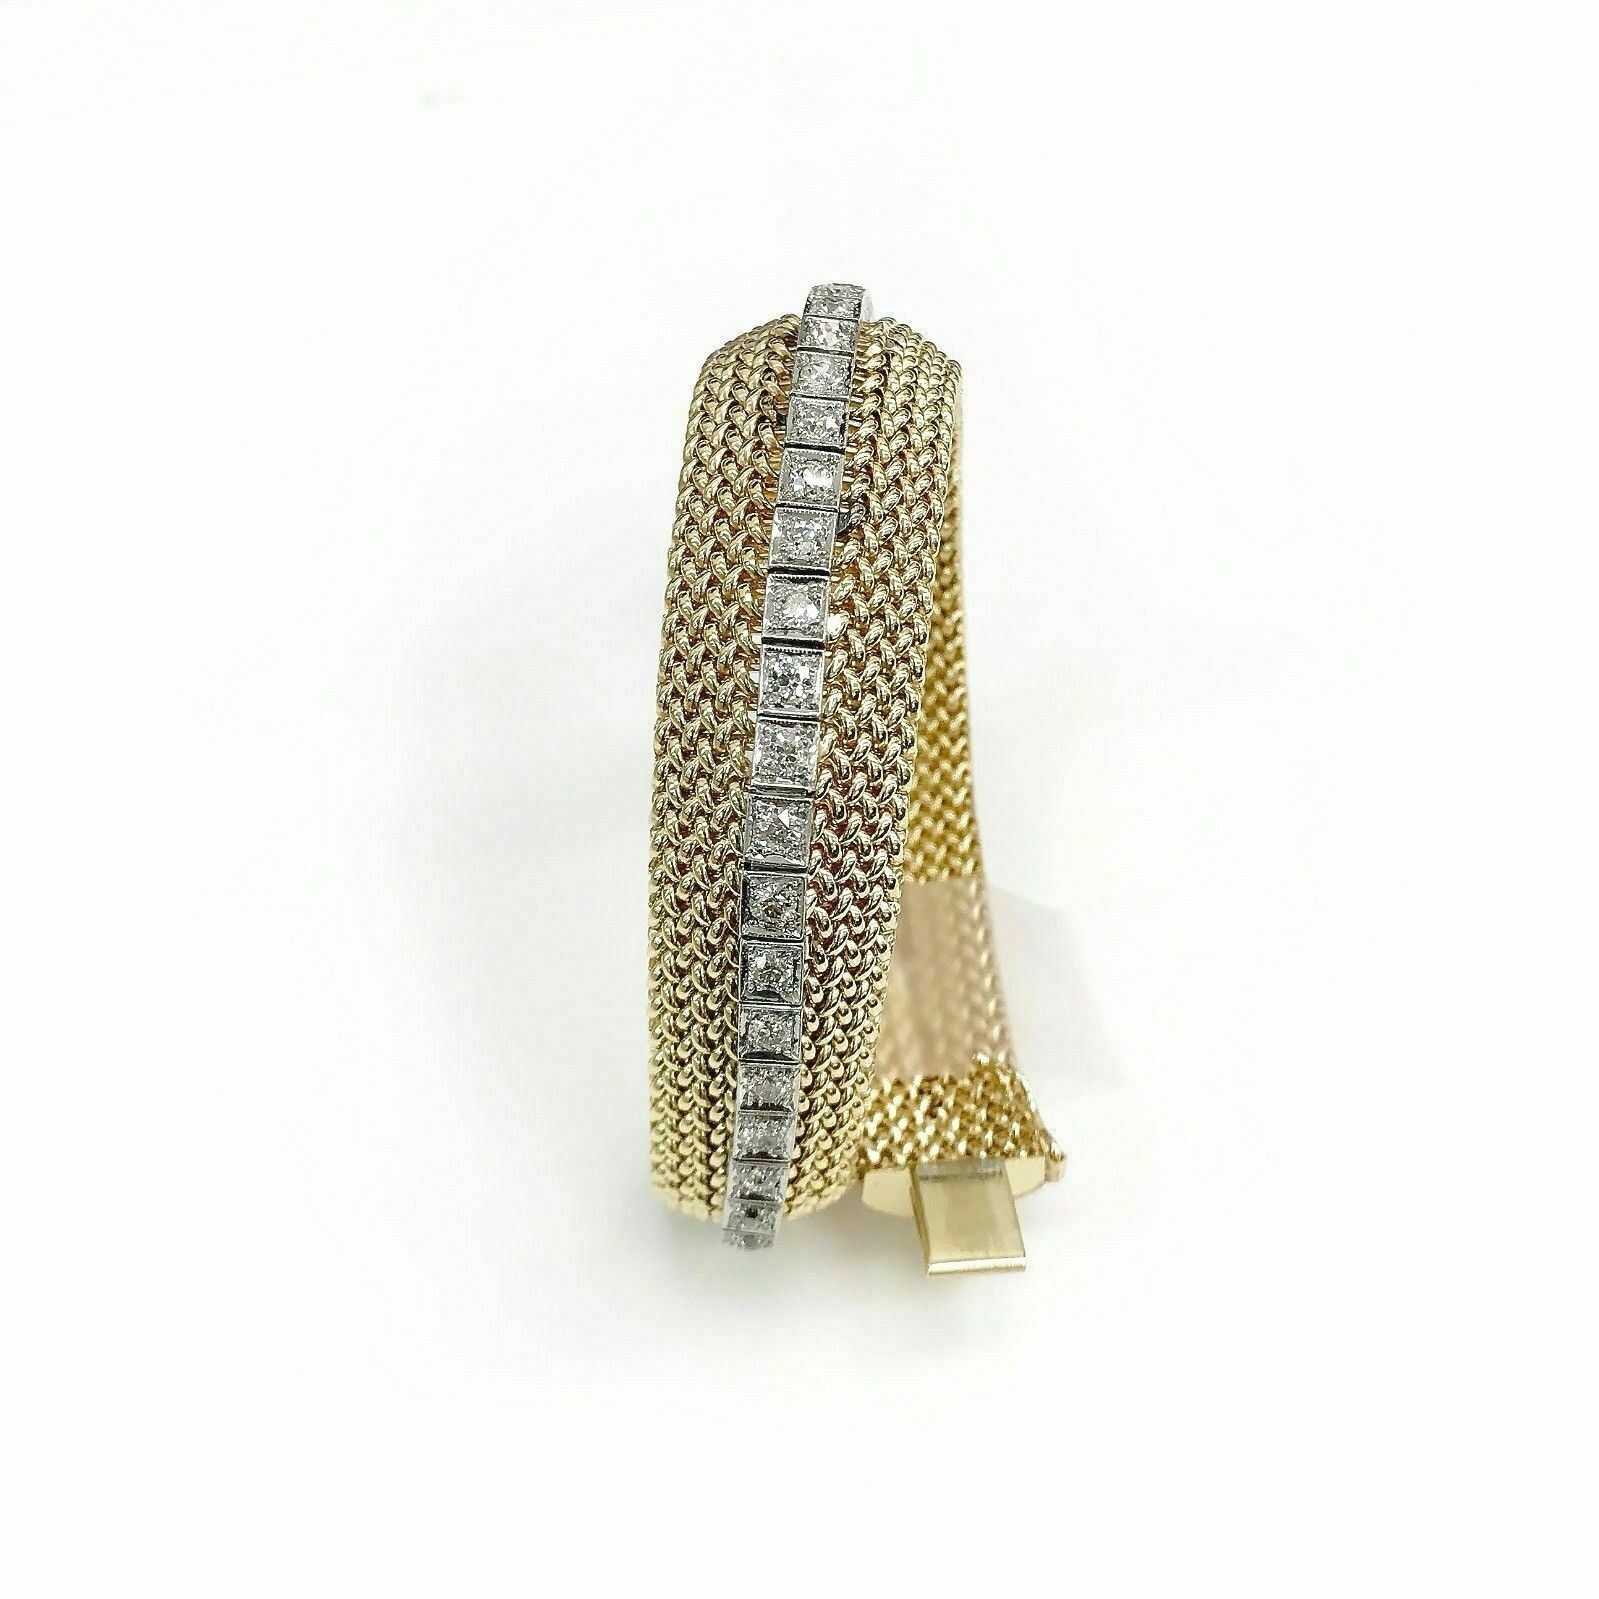 1970's Mesh 5.12 Carats Old Euro Diamond Bracelet Solid 14K 2 Tone Gold 60 Grams